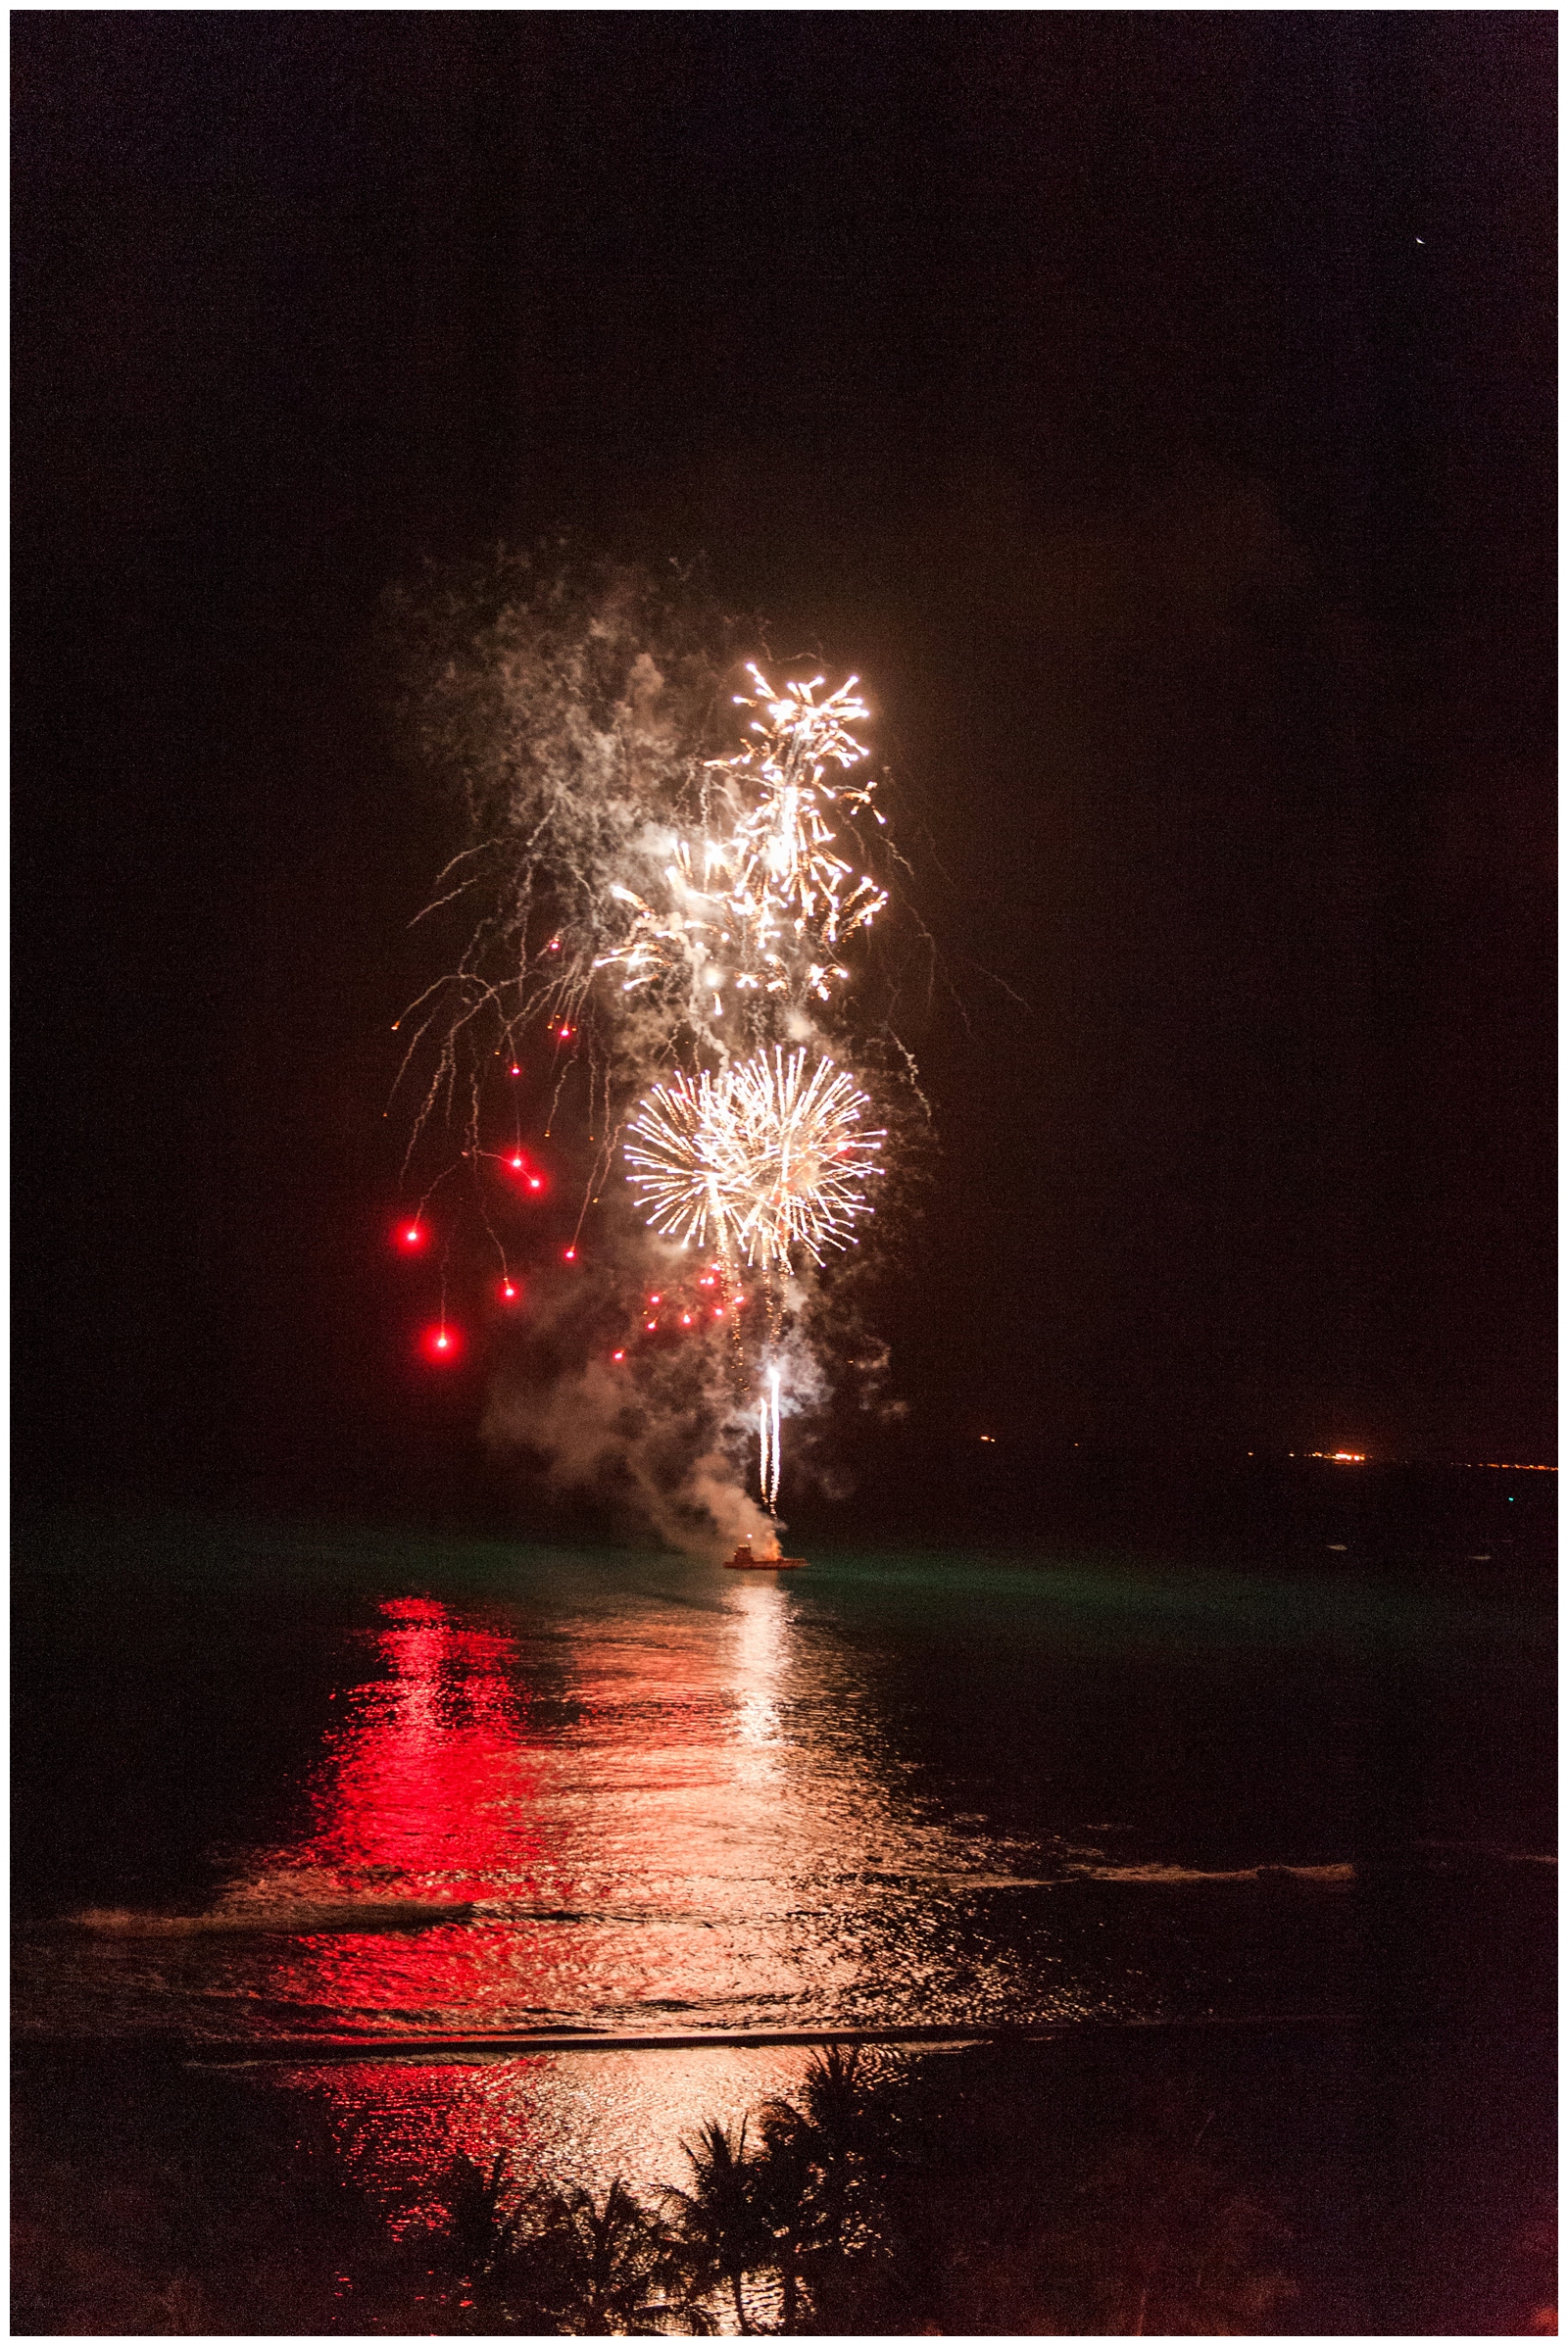 Fireworks over Waikiki Beach by Hilton Hawaiin Village on Friday nights